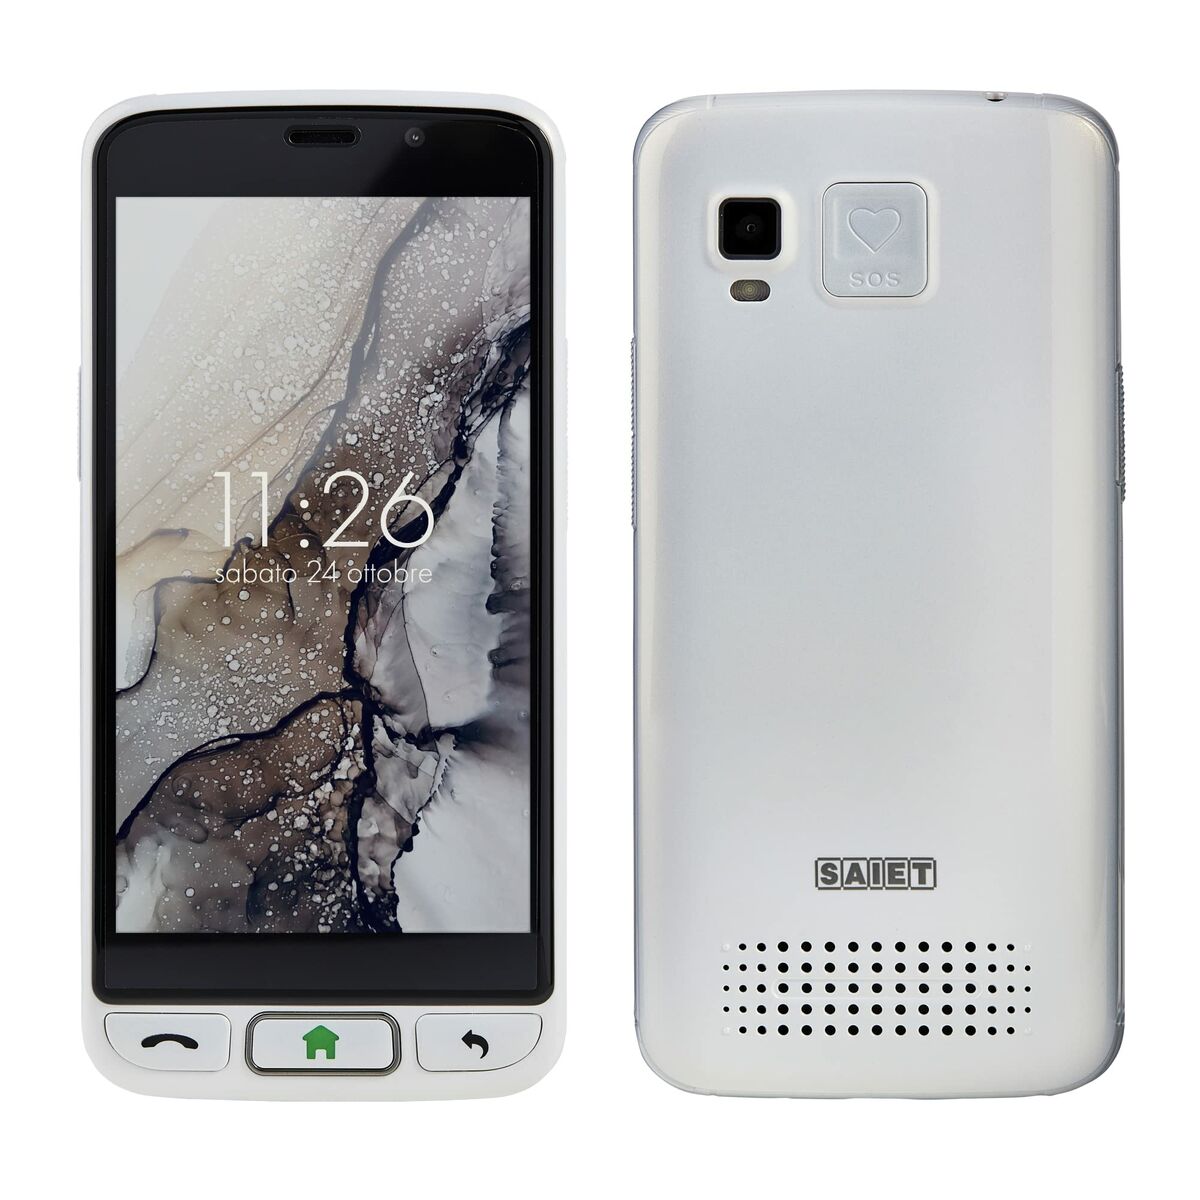 Smartphone STS502 Blue 8 GB 5" (Refurbished D)